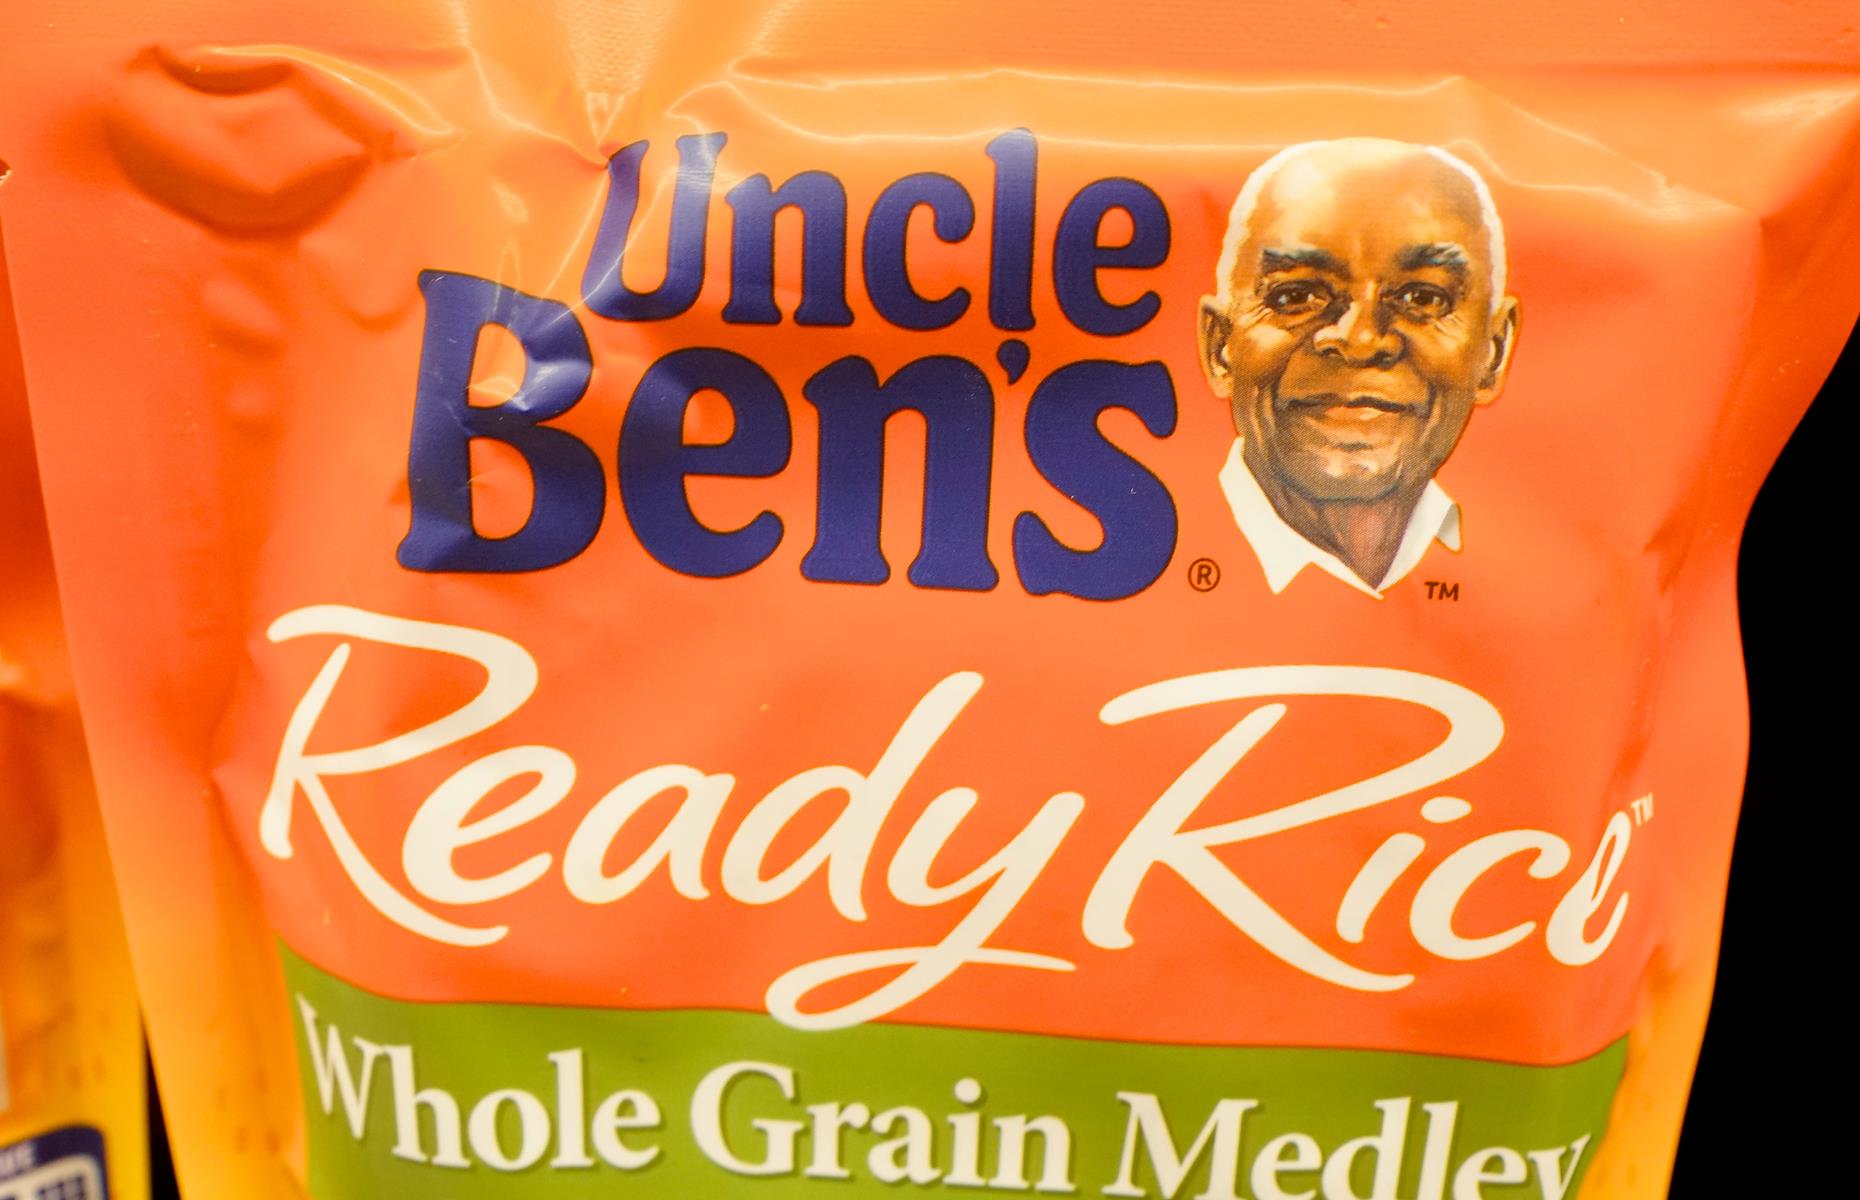 Mars drops Uncle Ben's, reveals new name for rice brand Ben's